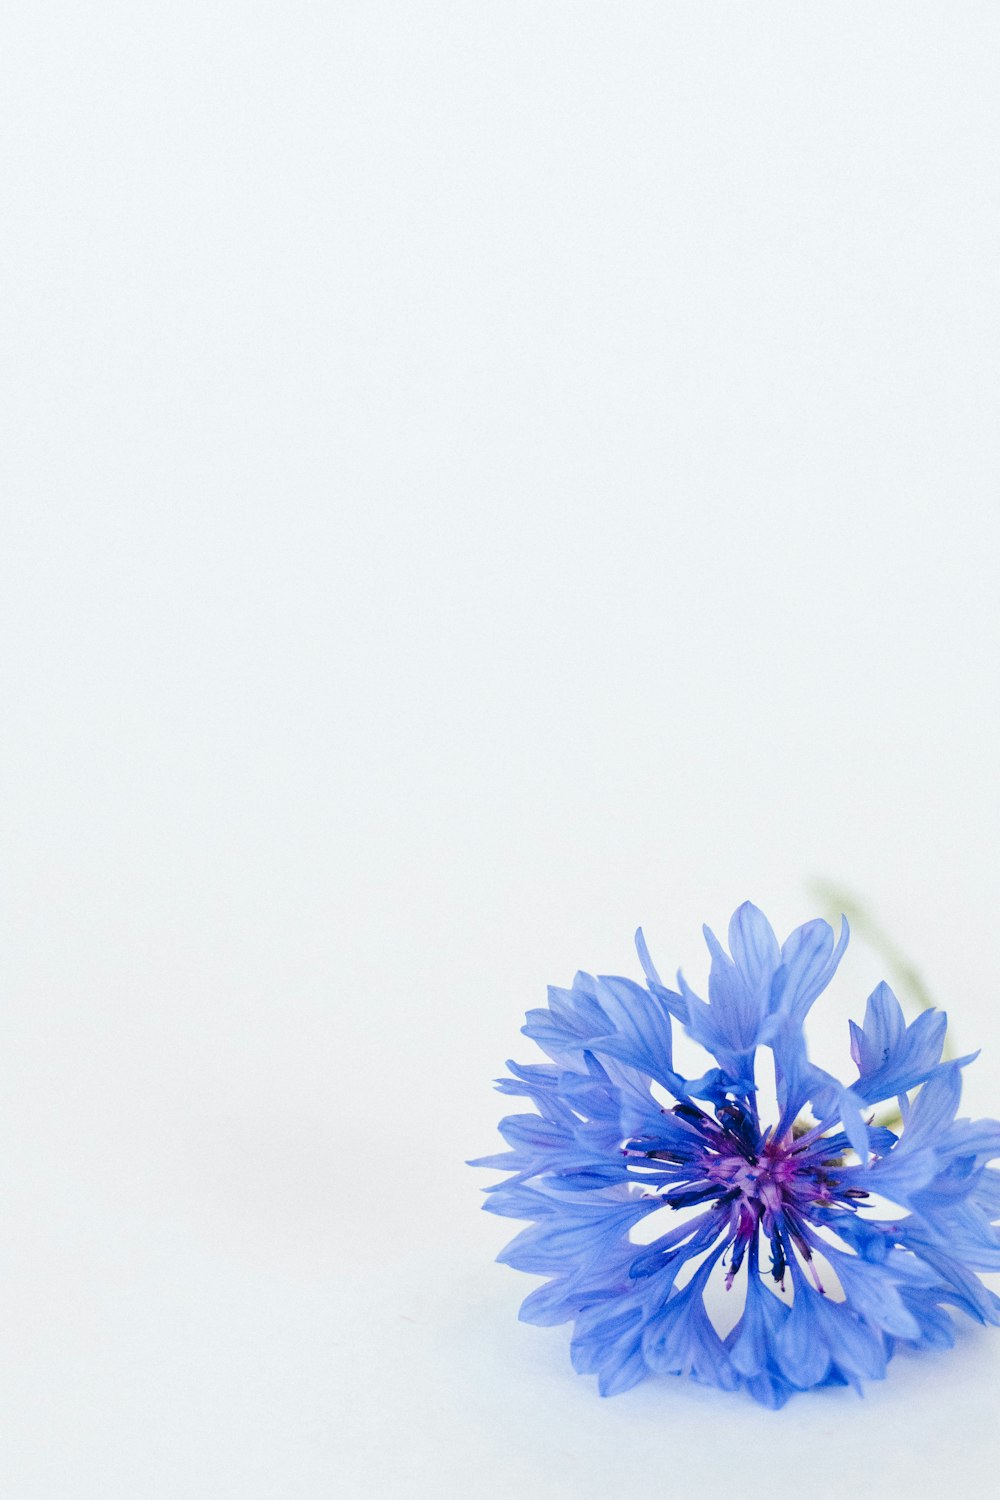 flor azul sobre fondo blanco